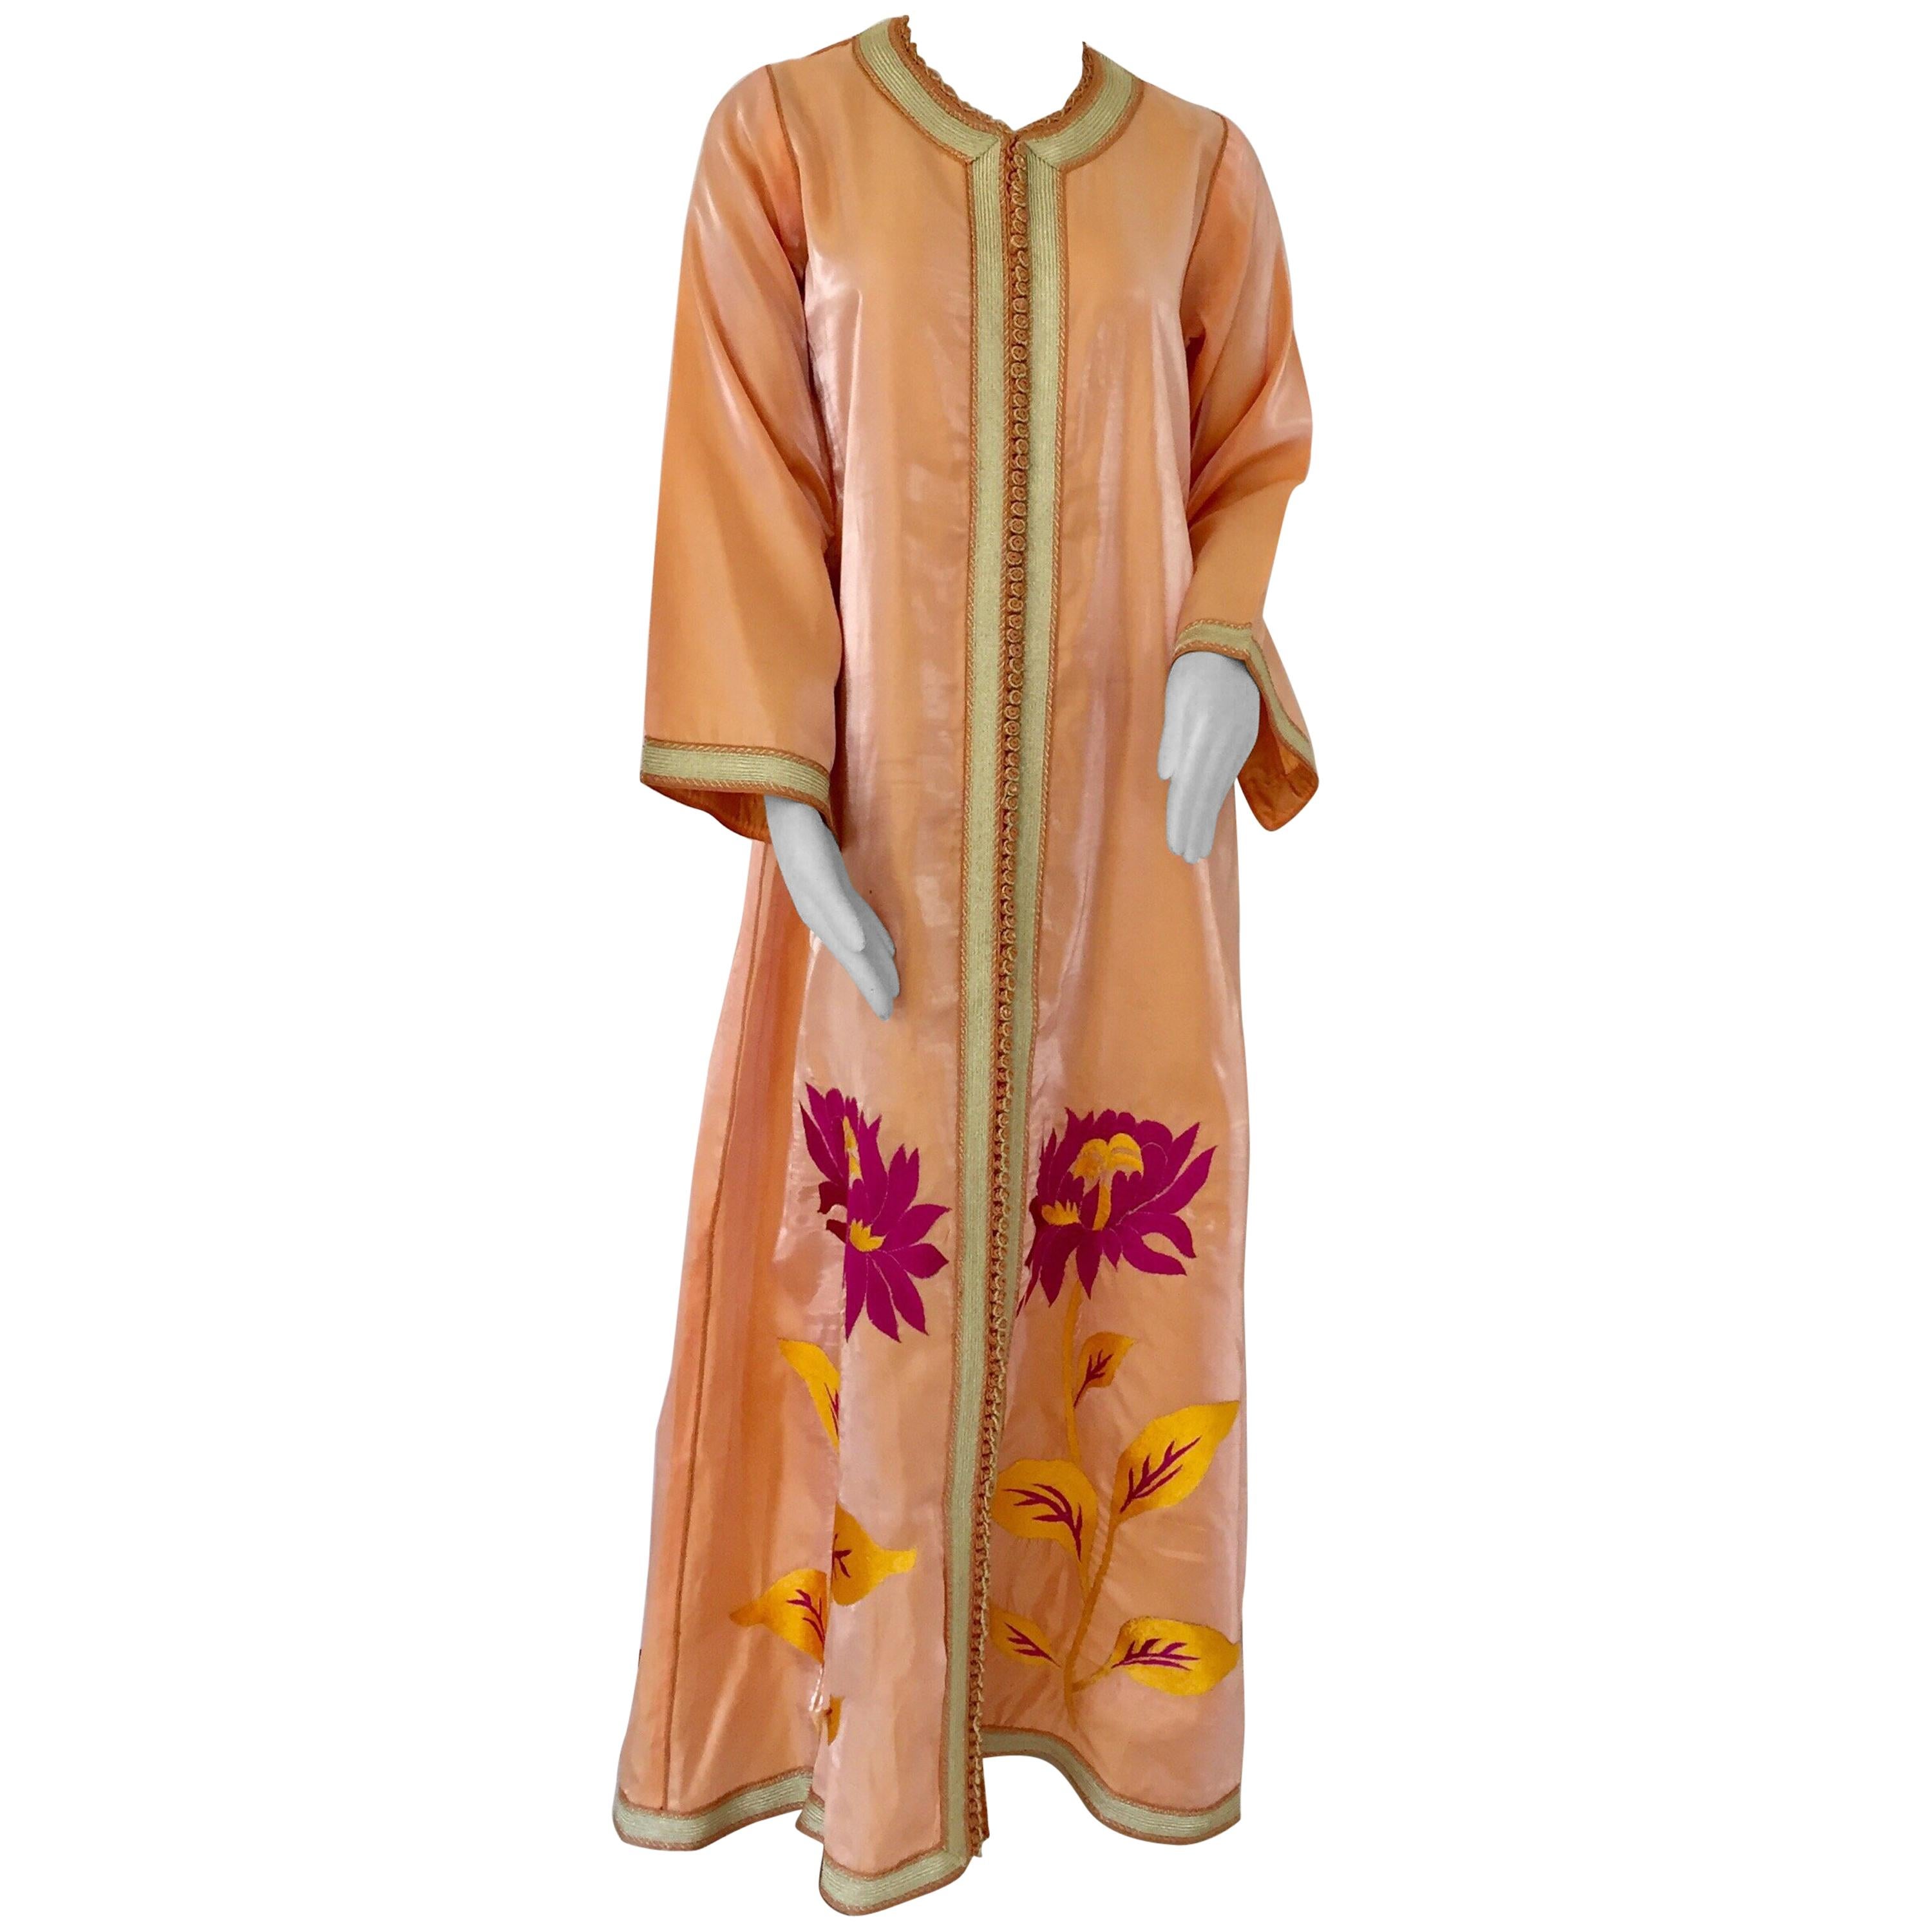 Moroccan Vintage Caftan 1970s Kaftan Maxi Dress Orange with Floral Embroideries